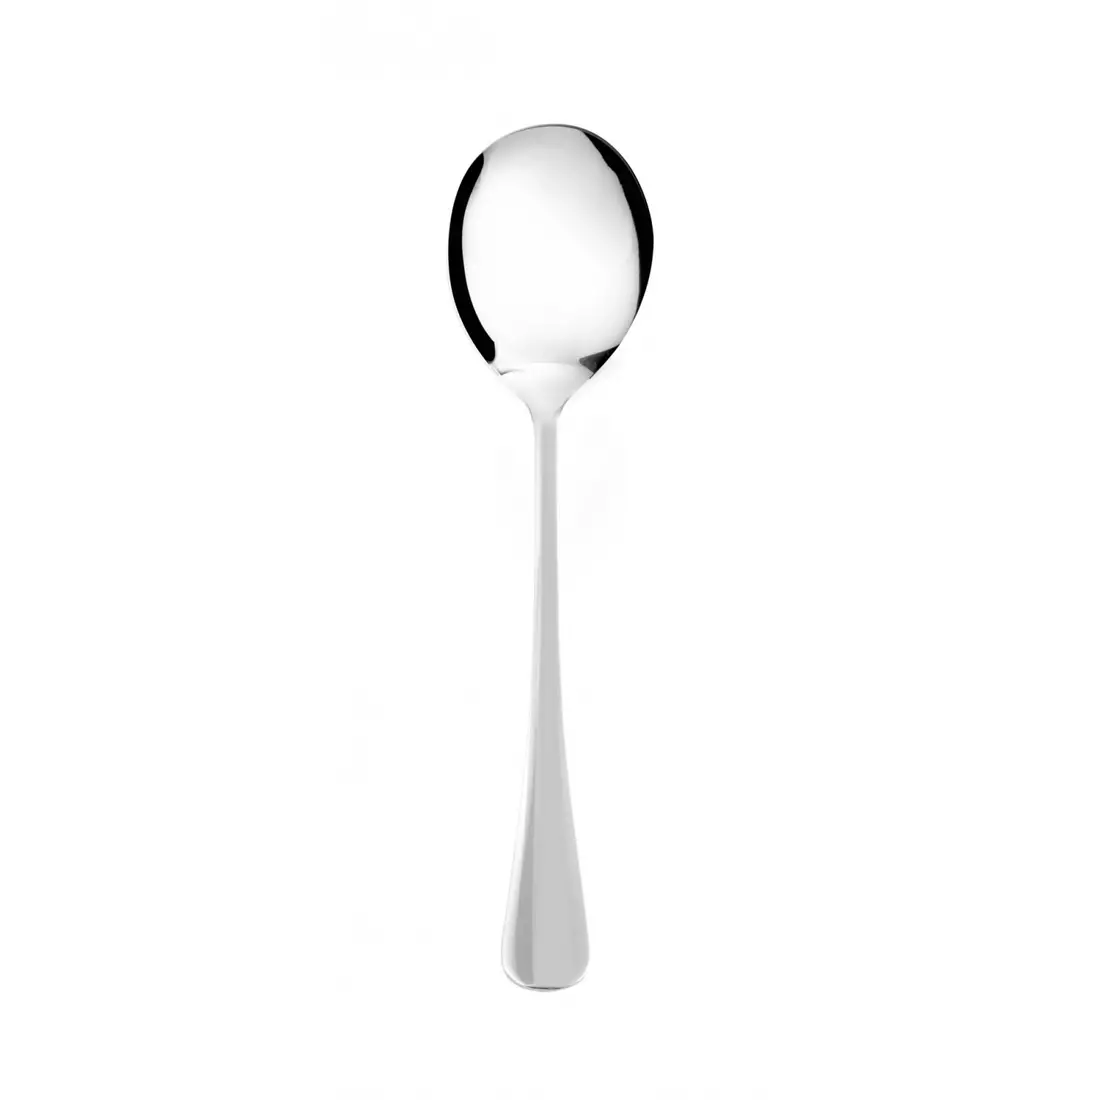 KULIG PAROS salad spoon, silver